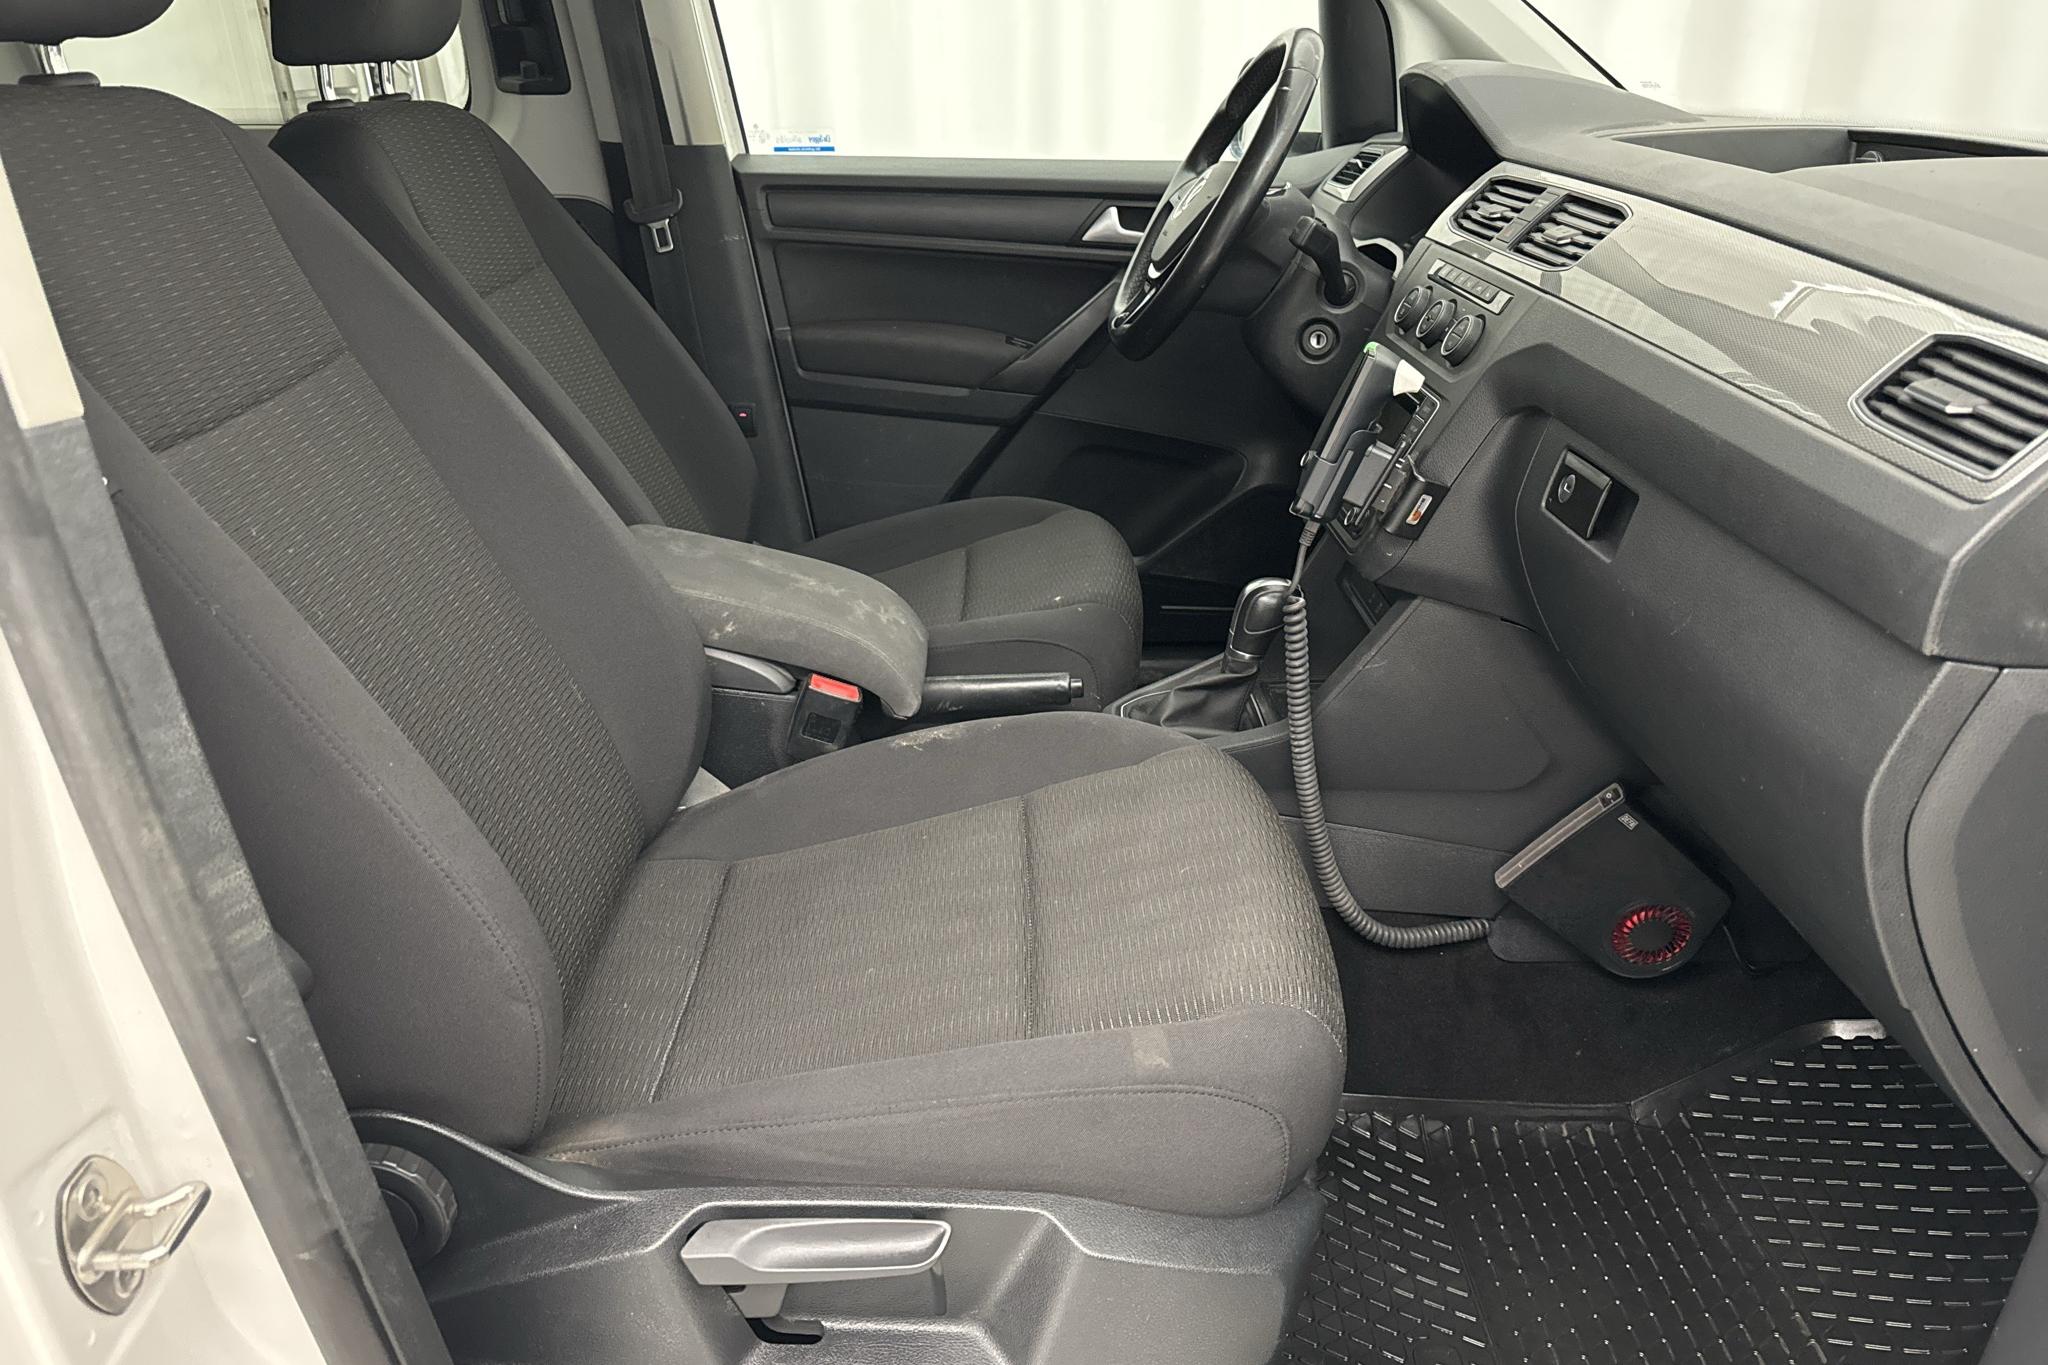 VW Caddy Maxi Life 2.0 TDI 4MOTION (150hk) - 16 960 km - Automatic - white - 2019